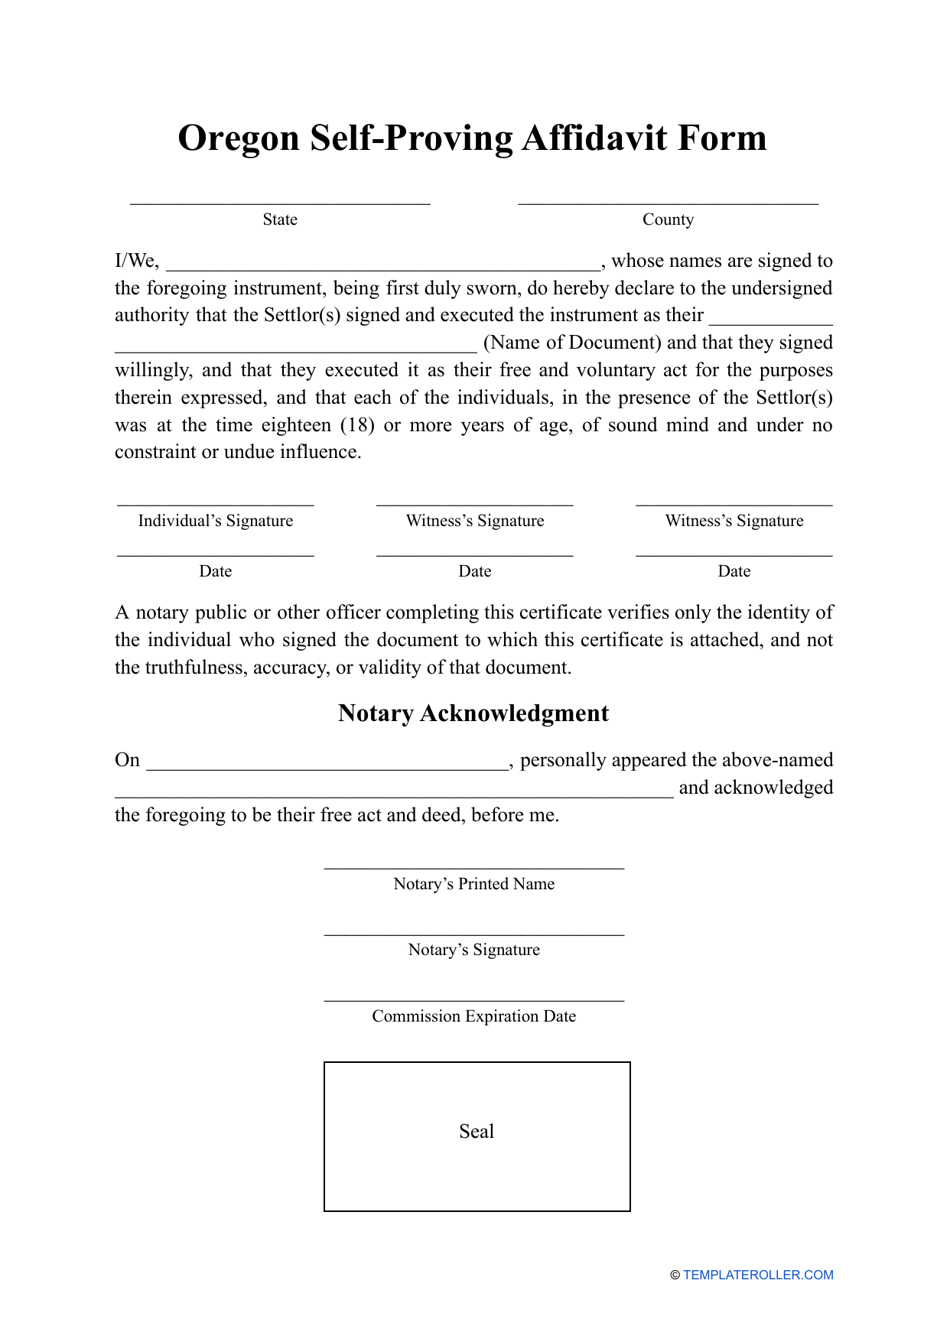 Self-proving Affidavit Form - Oregon, Page 1